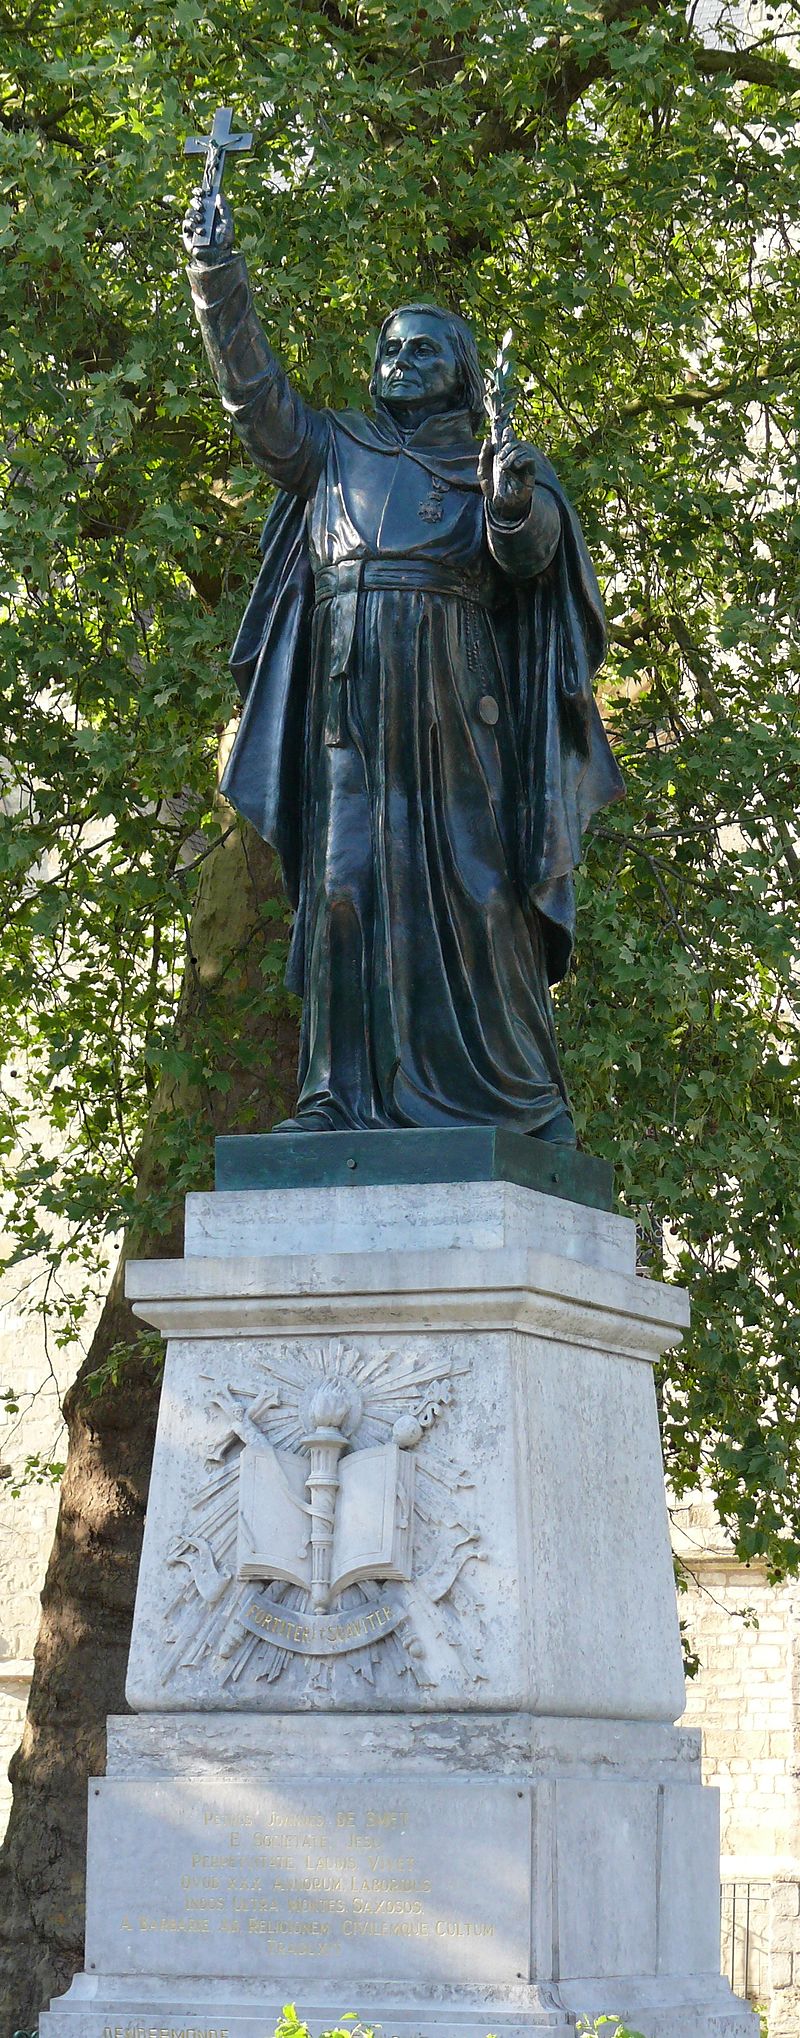 Statue of Fr. De Smet in Dendermonde, Belgium